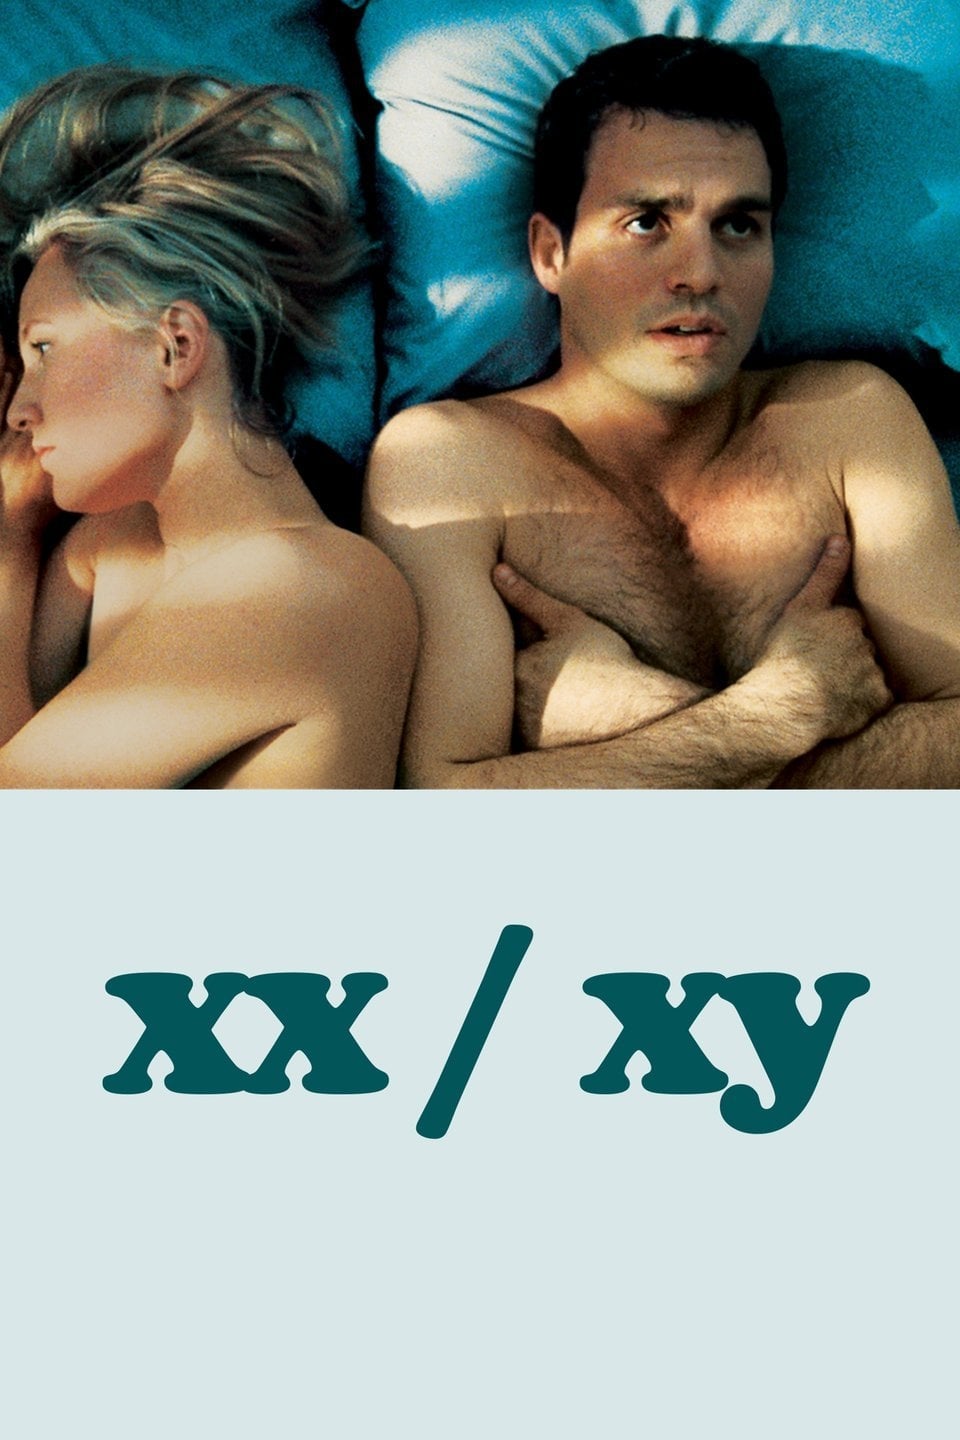 Caratula de XX/XY (XX/XY) 